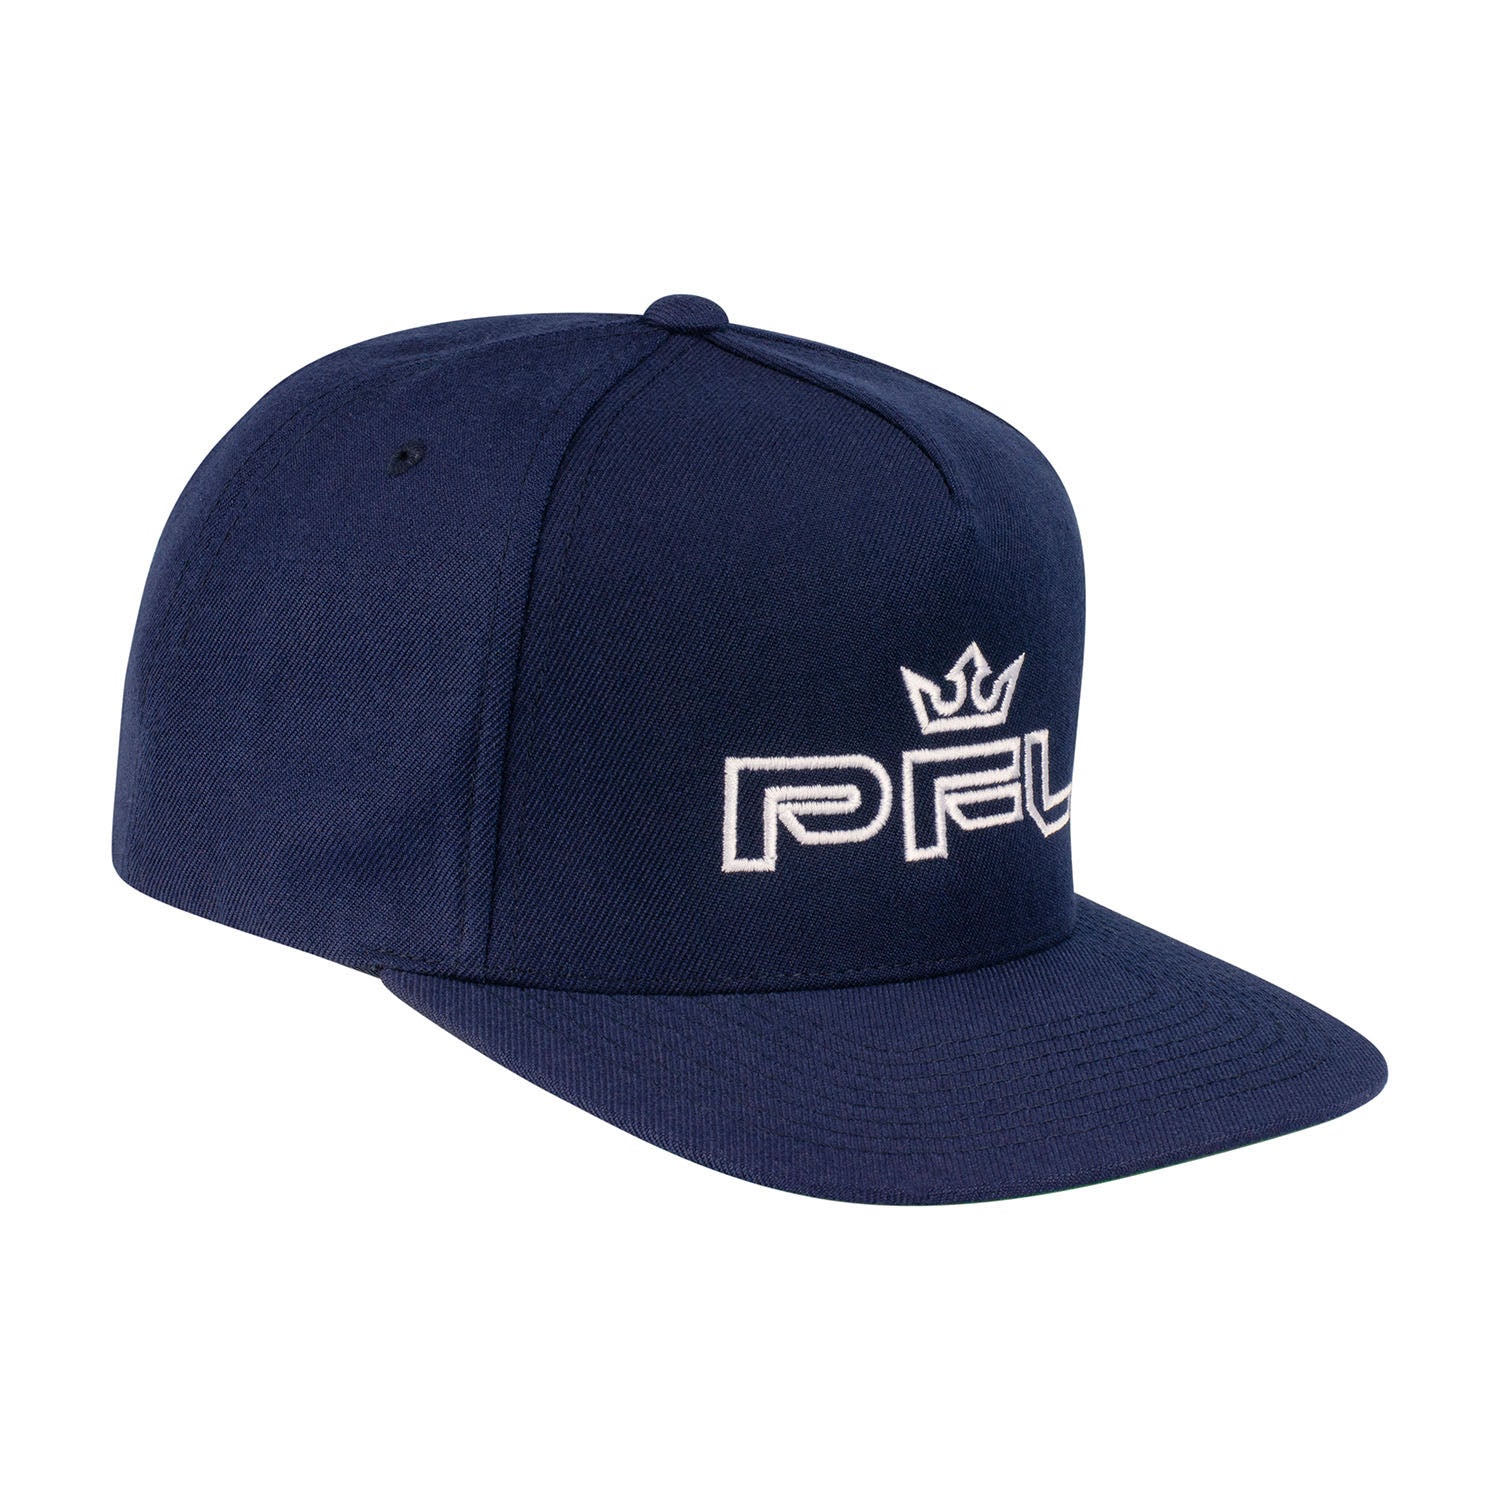 PFL Flatbill Snapback Hat in Navy - Left Side View